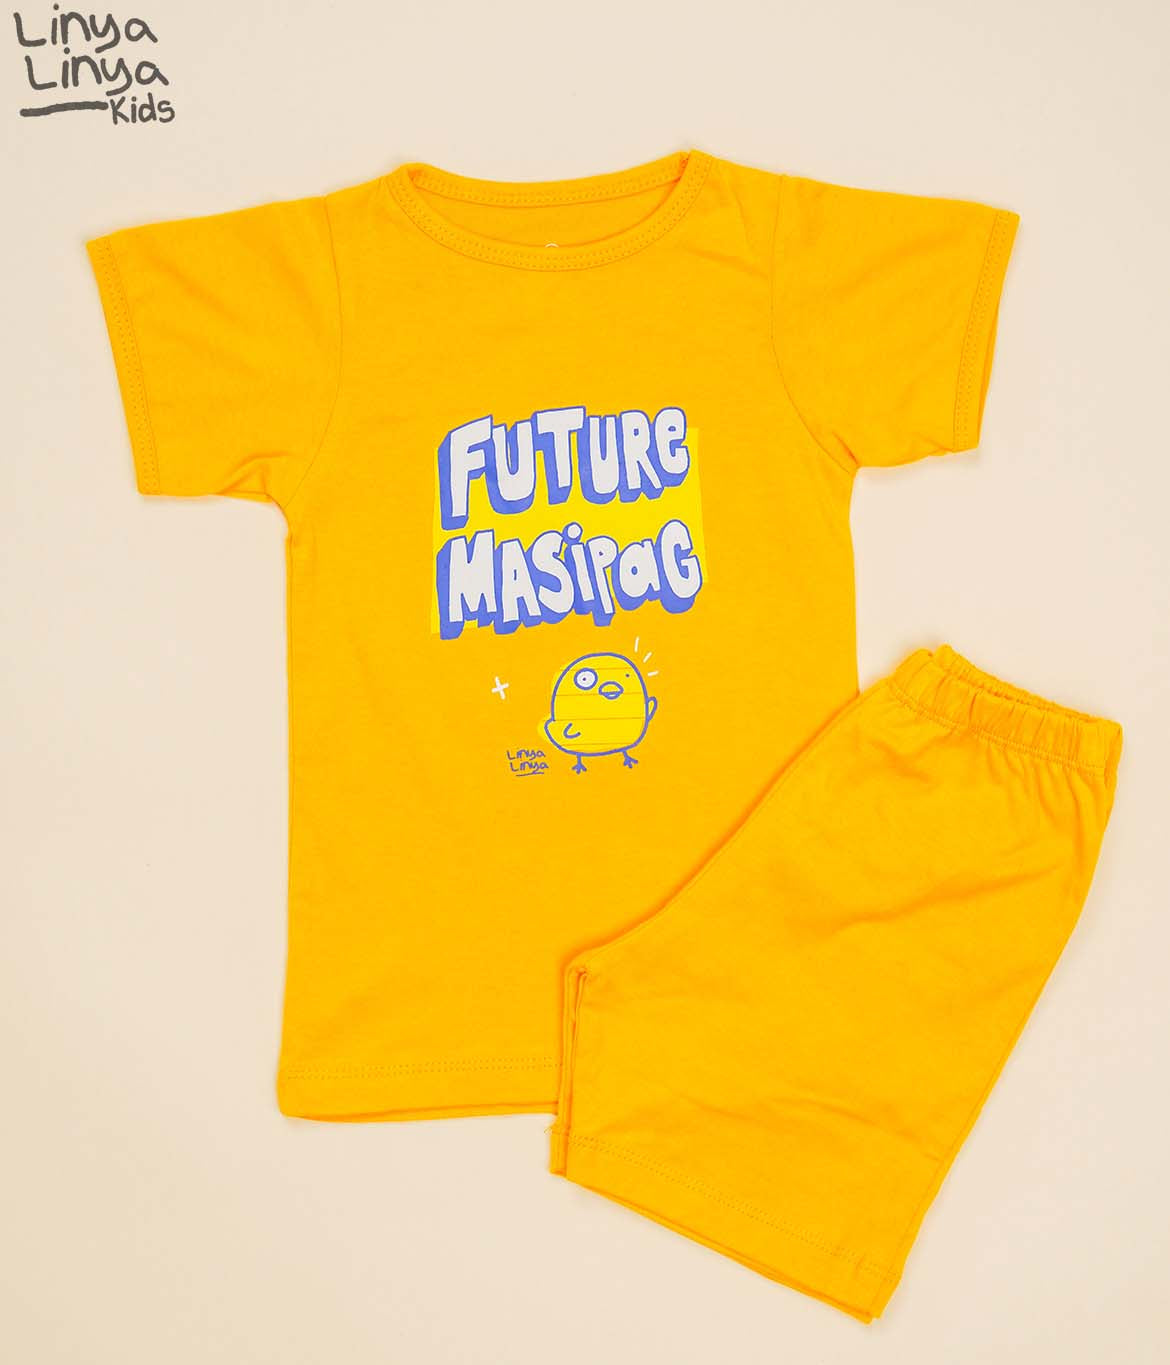 Kids Complete Terno Set: Future Masipag